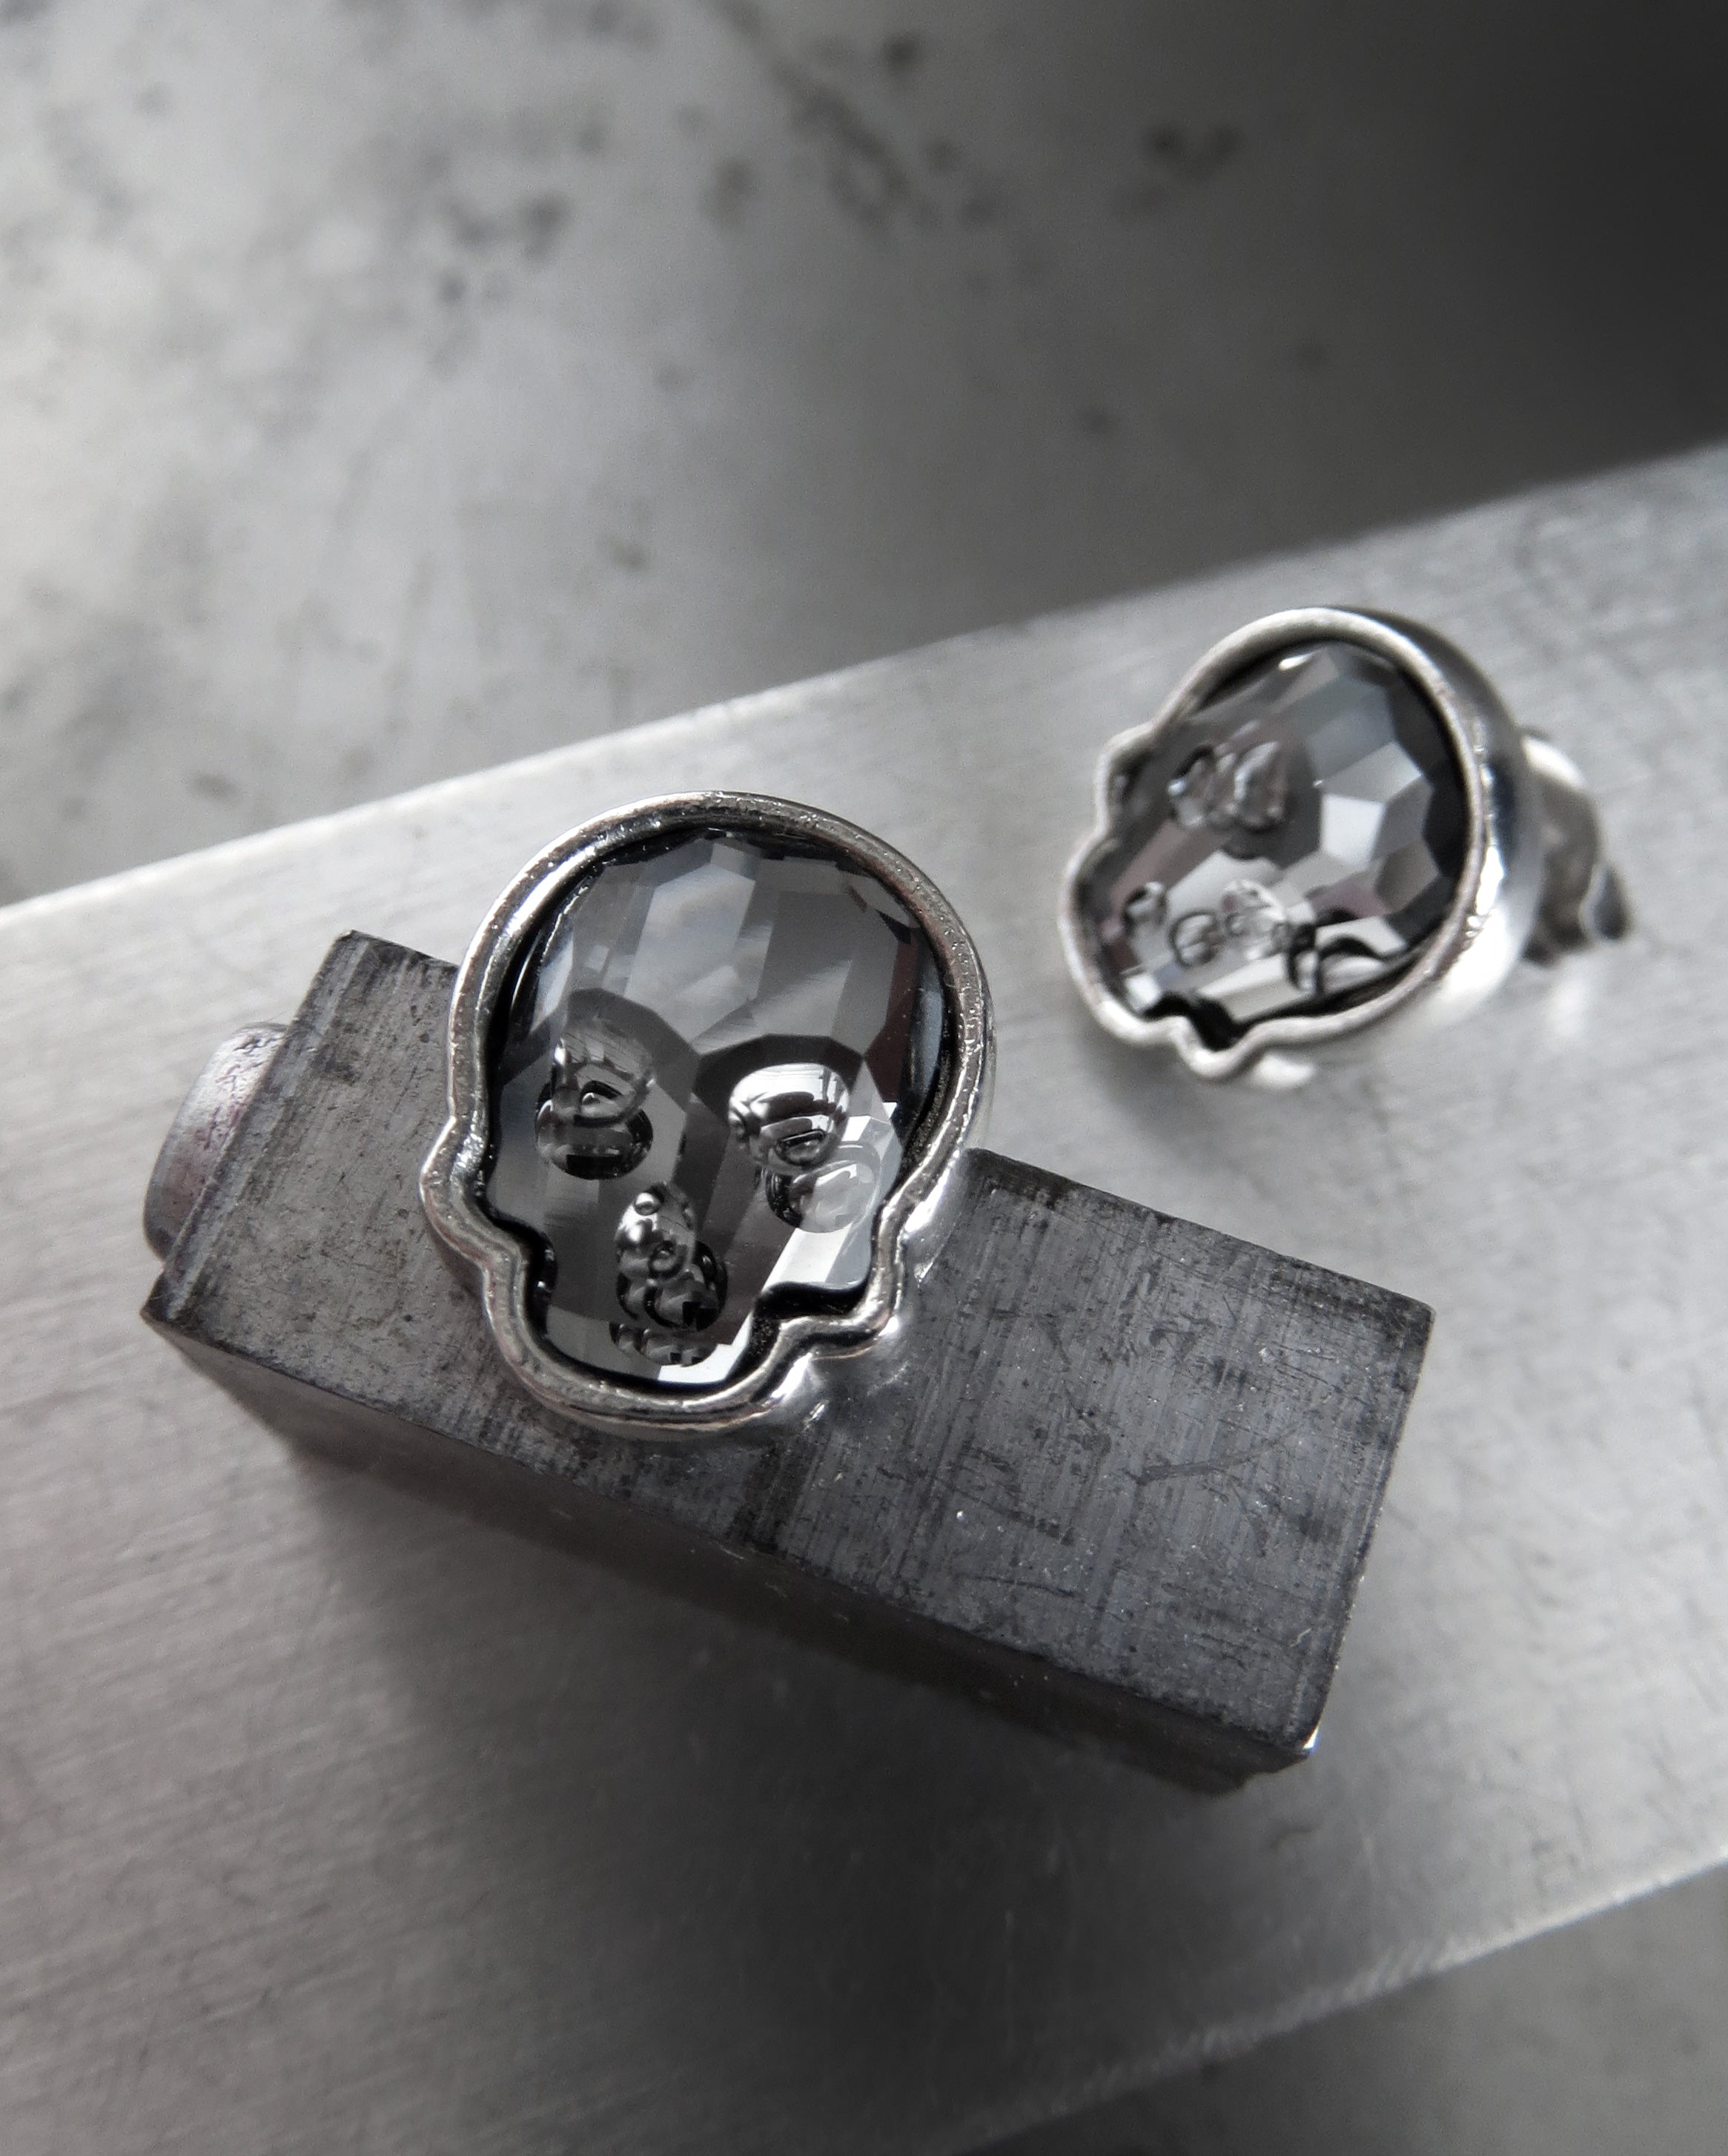 Crystal Skull Stud Earrings - Midnight Black with Silver